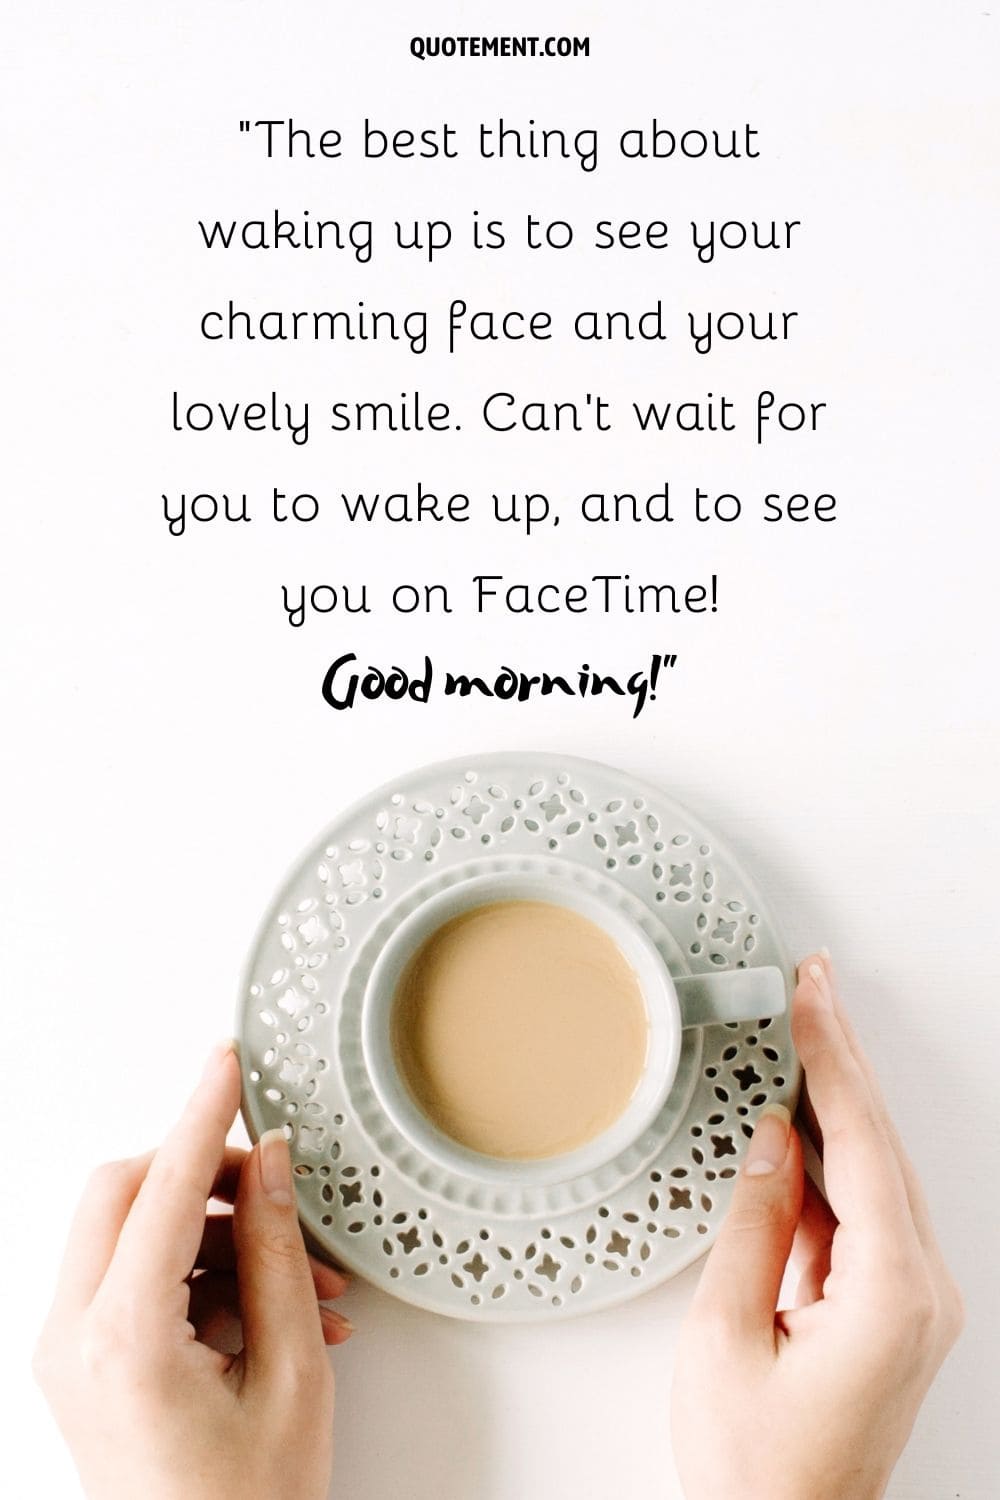 aesthetic white coffe mug on table representing sunday good morning message